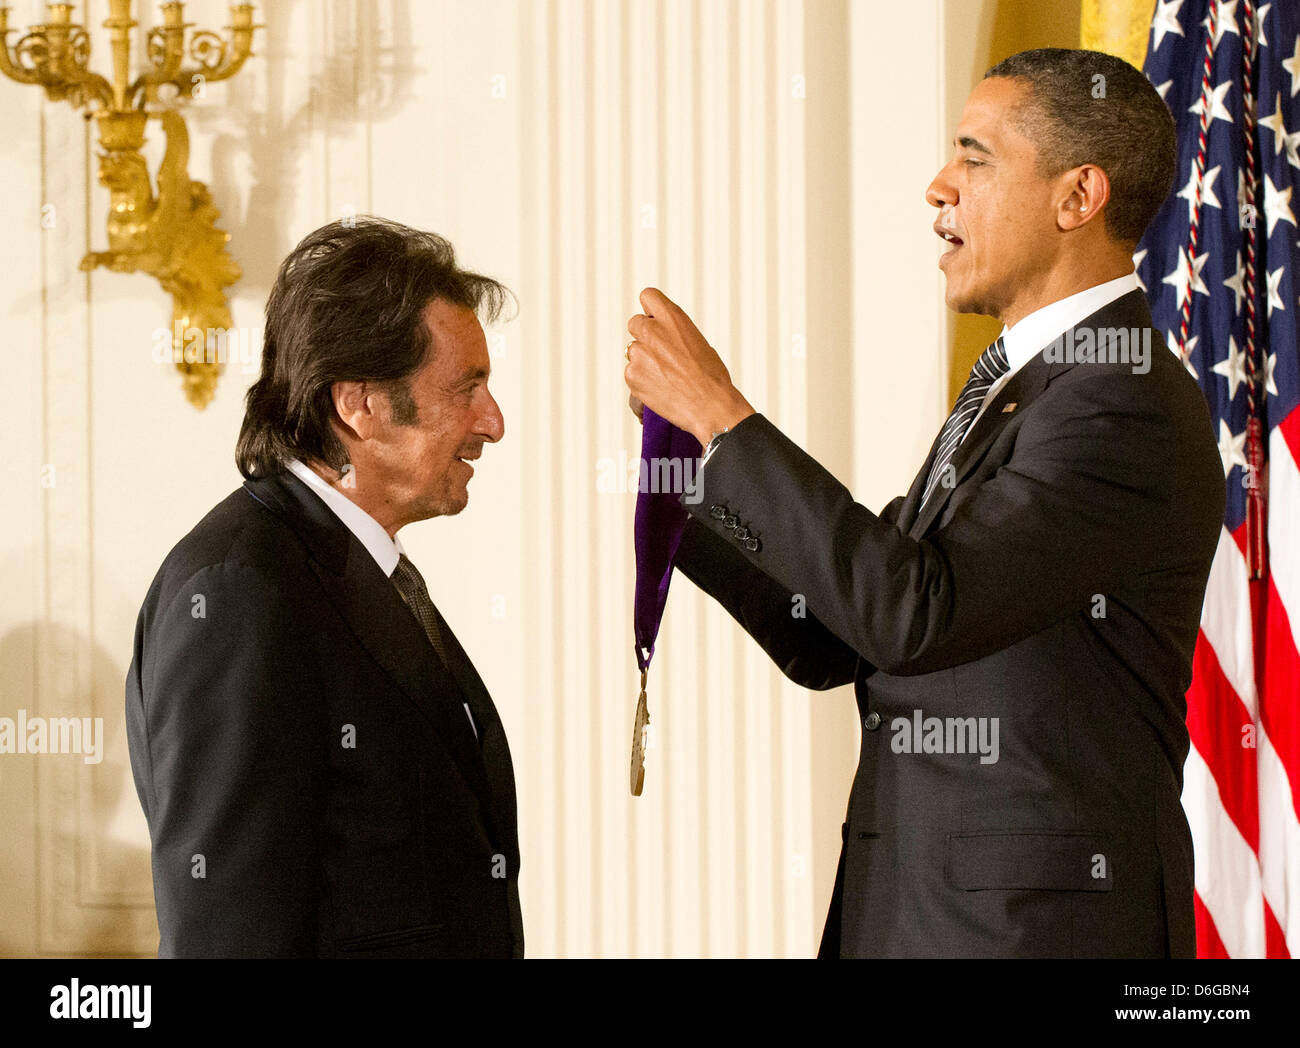 President Barack Obama awards the 2012 National Medal of Arts to